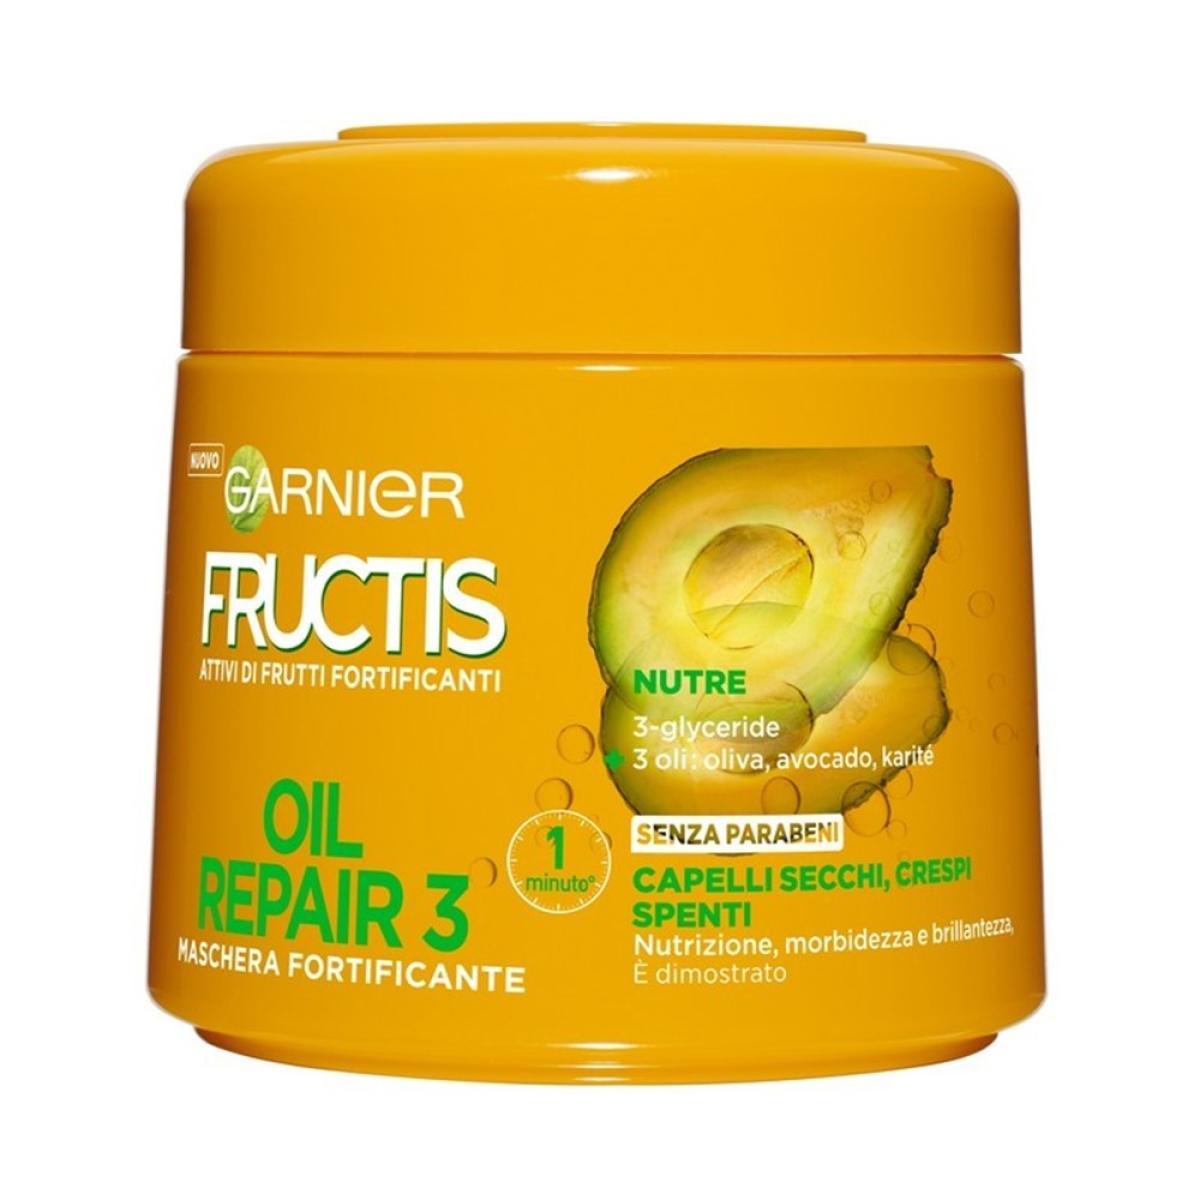 ماسک مغذی و ترمیم کننده موی روغن های مغذی - Fructis Oil Repair 3 Strengthening Mask For Dry and Damaged Hair 300 ml